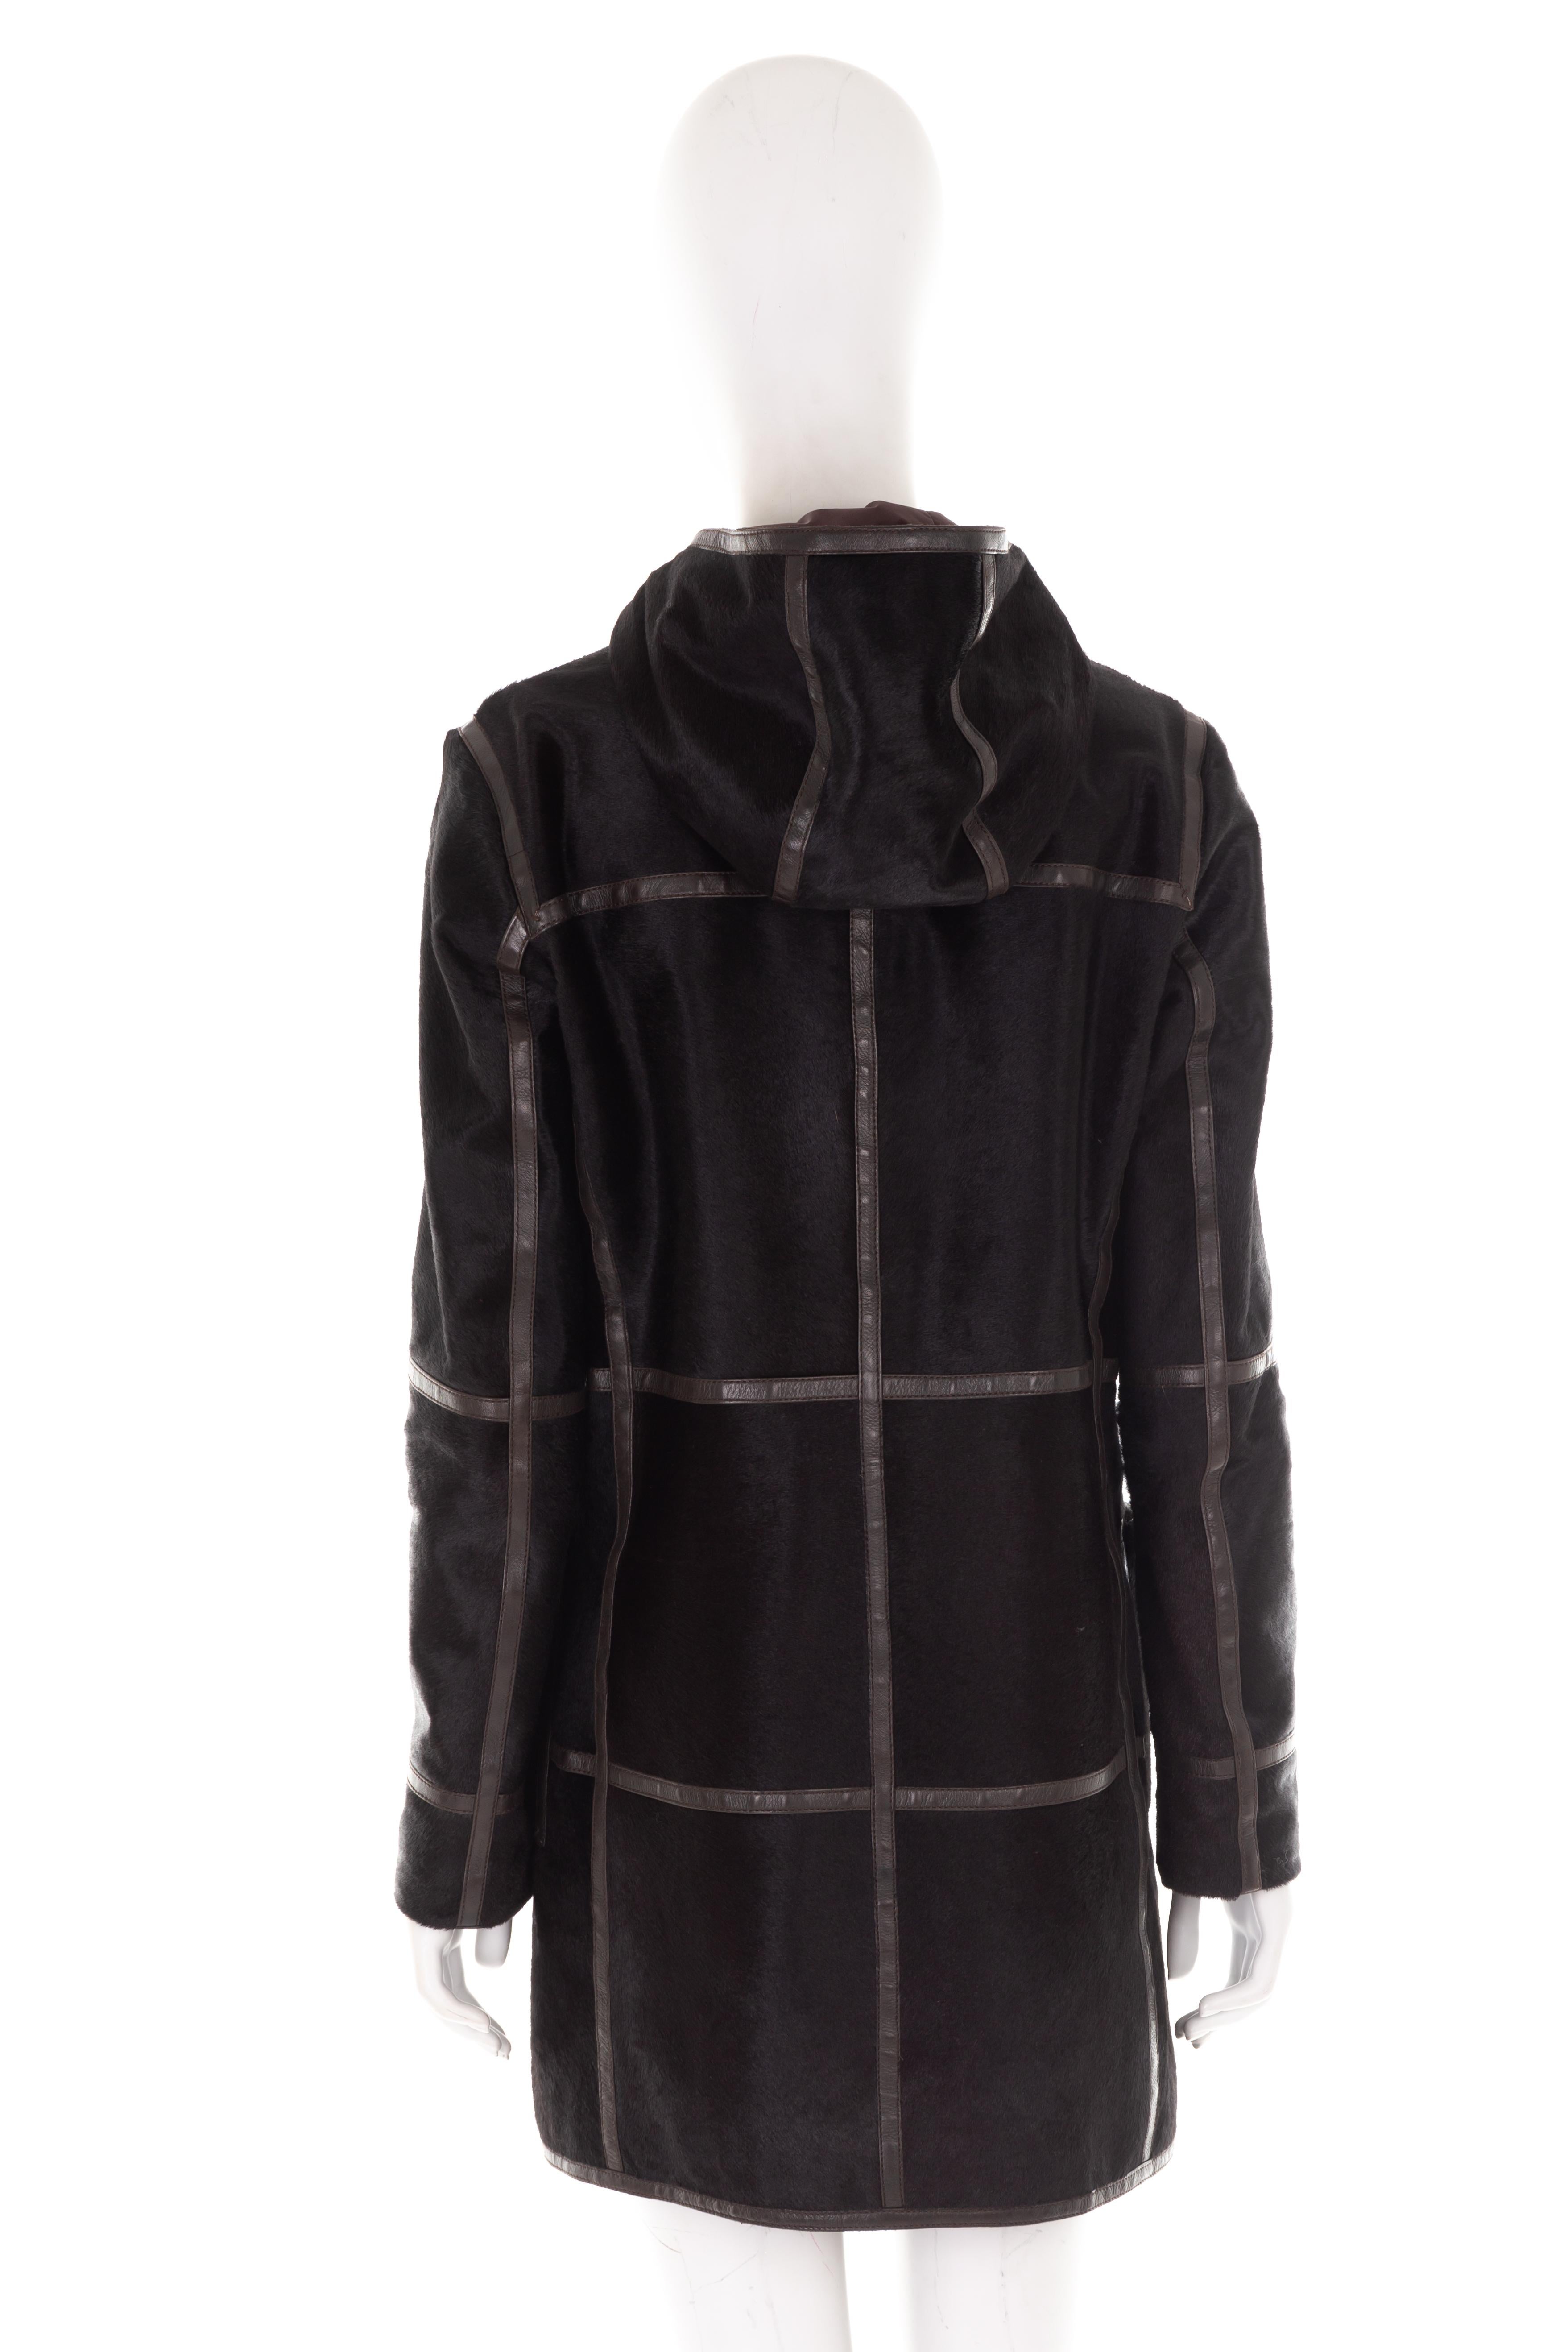 Prada by Miuccia Prada F/W 2005 black calfskin hooded coat  For Sale 2